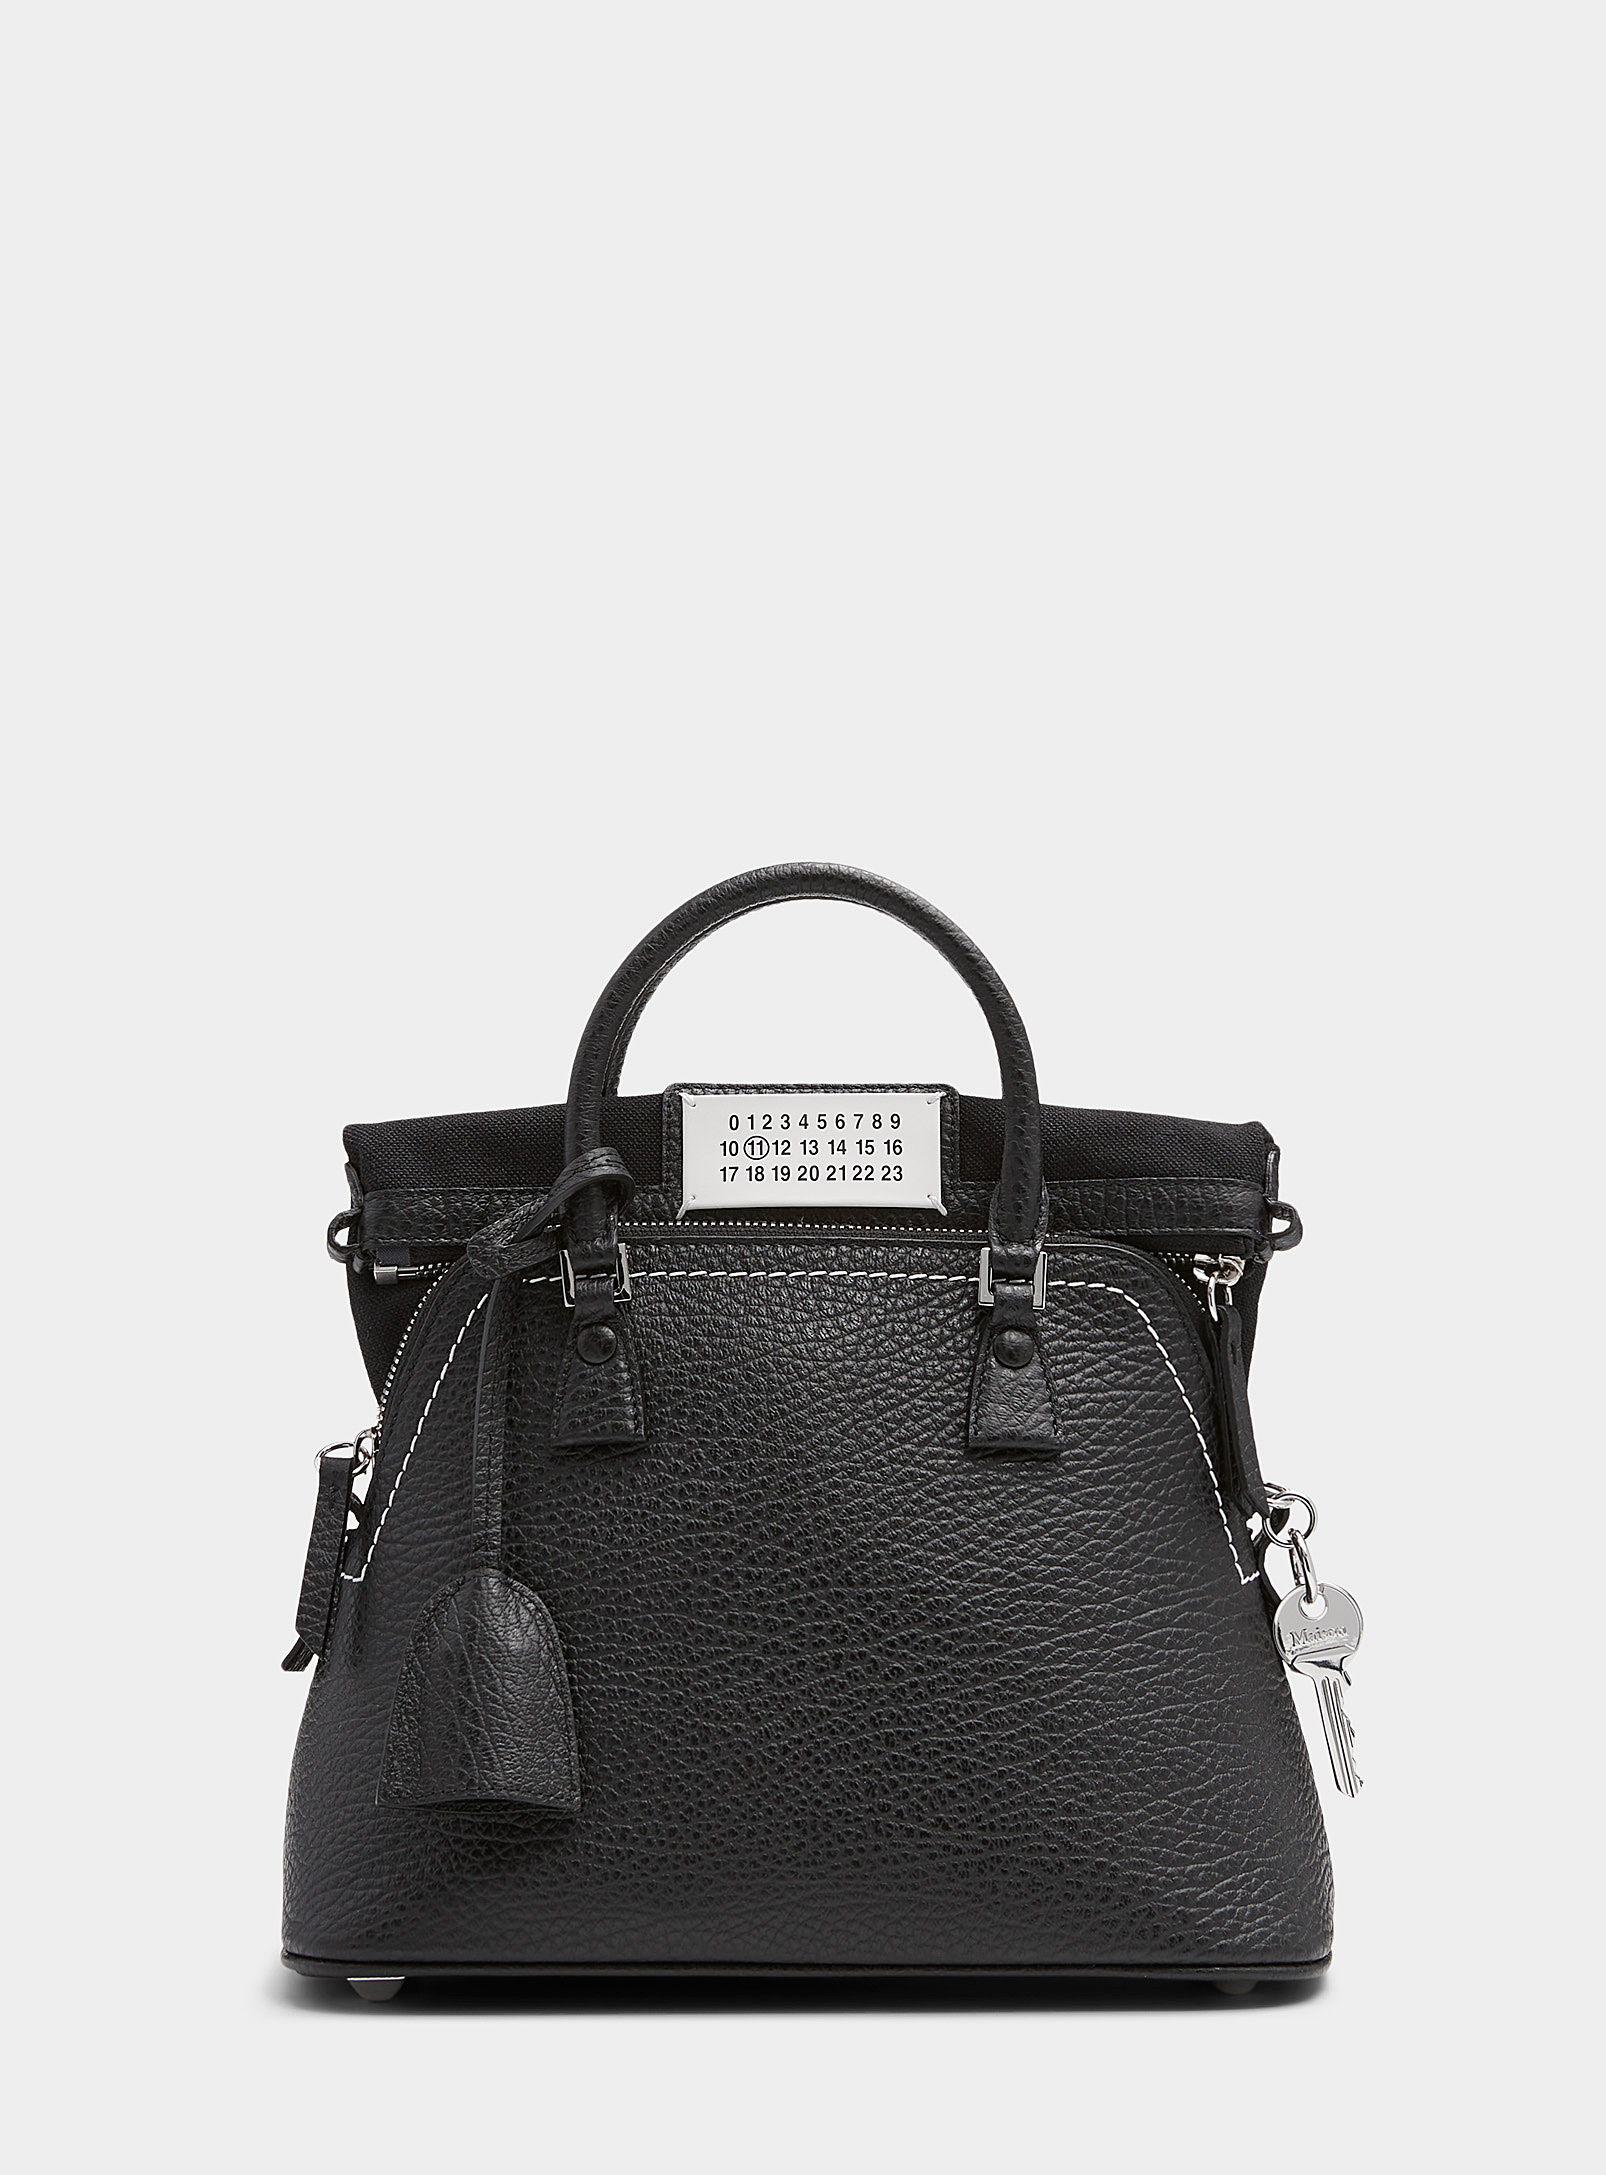 Maison Margiela - Women's 5AC mini classic handbag